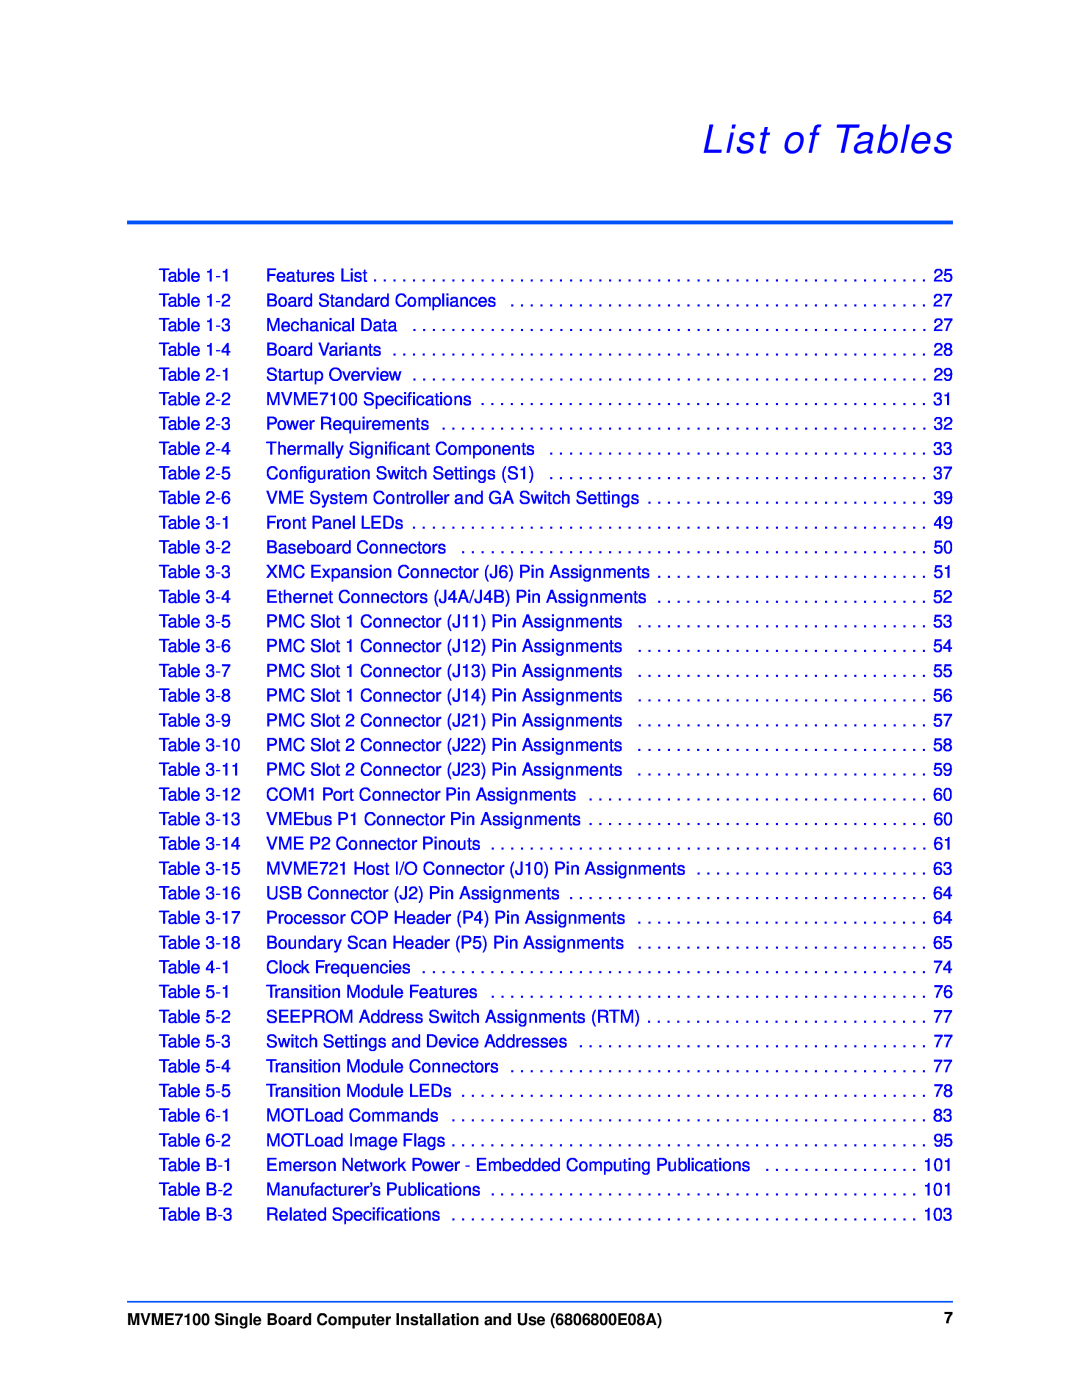 Emerson MVME7100 List of Tables, Table B-1, Emerson Network Power - Embedded Computing Publications, Table B-2, Table B-3 